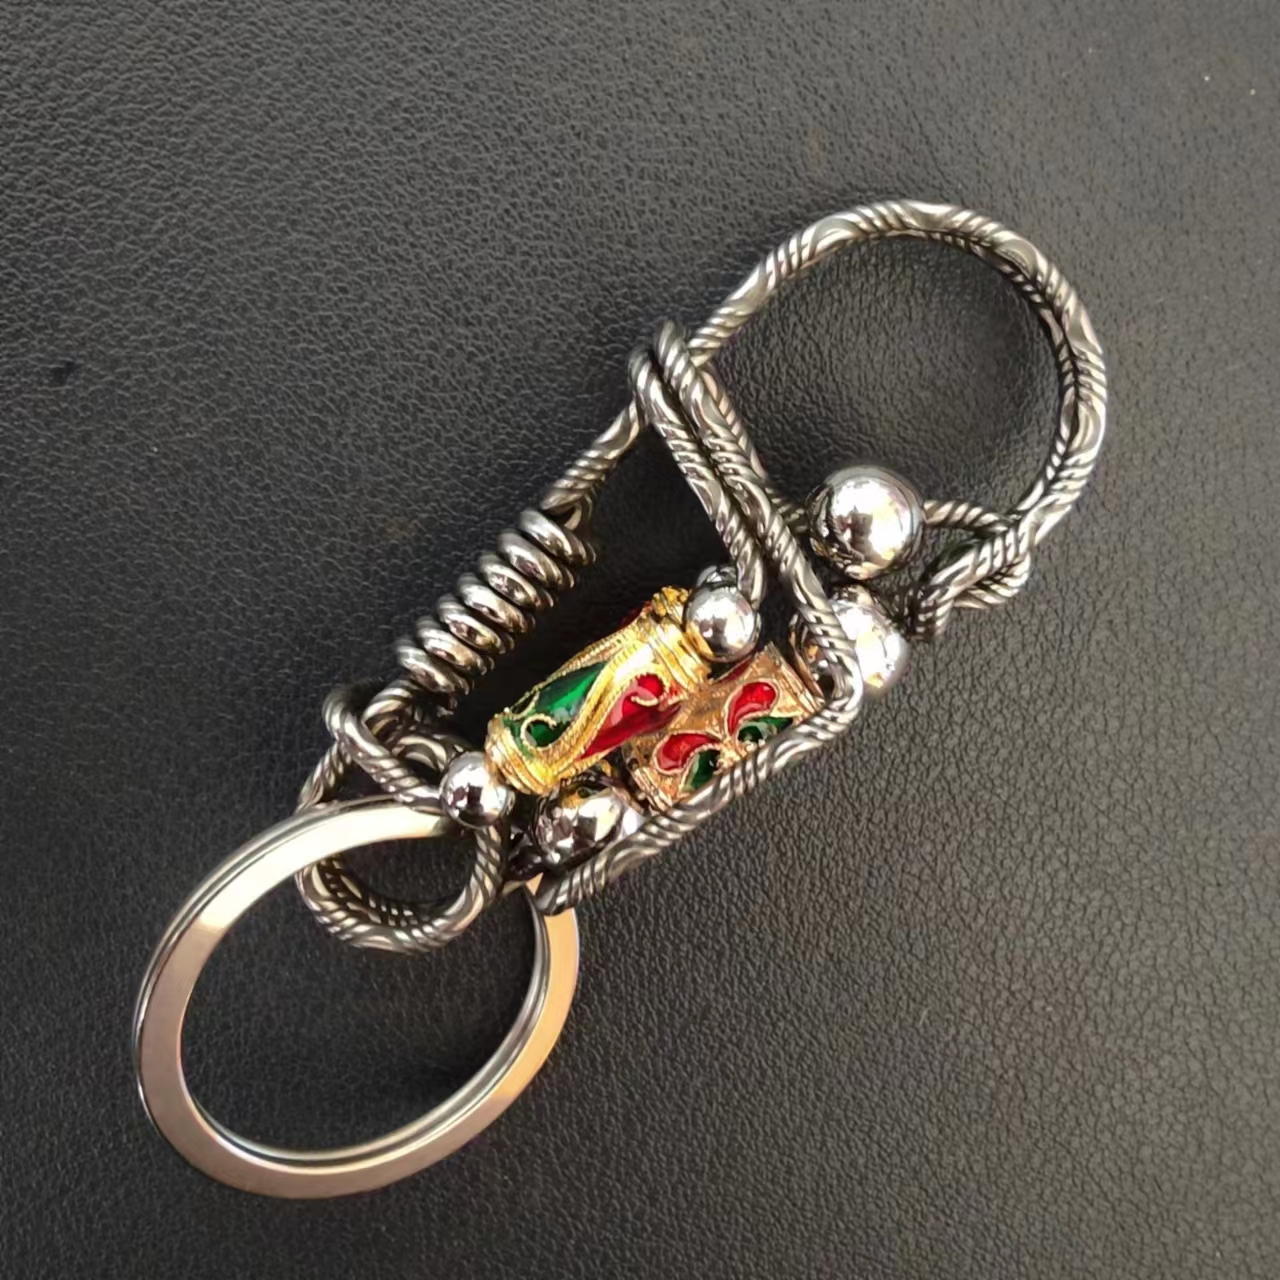 Stainless steel handmade keychain